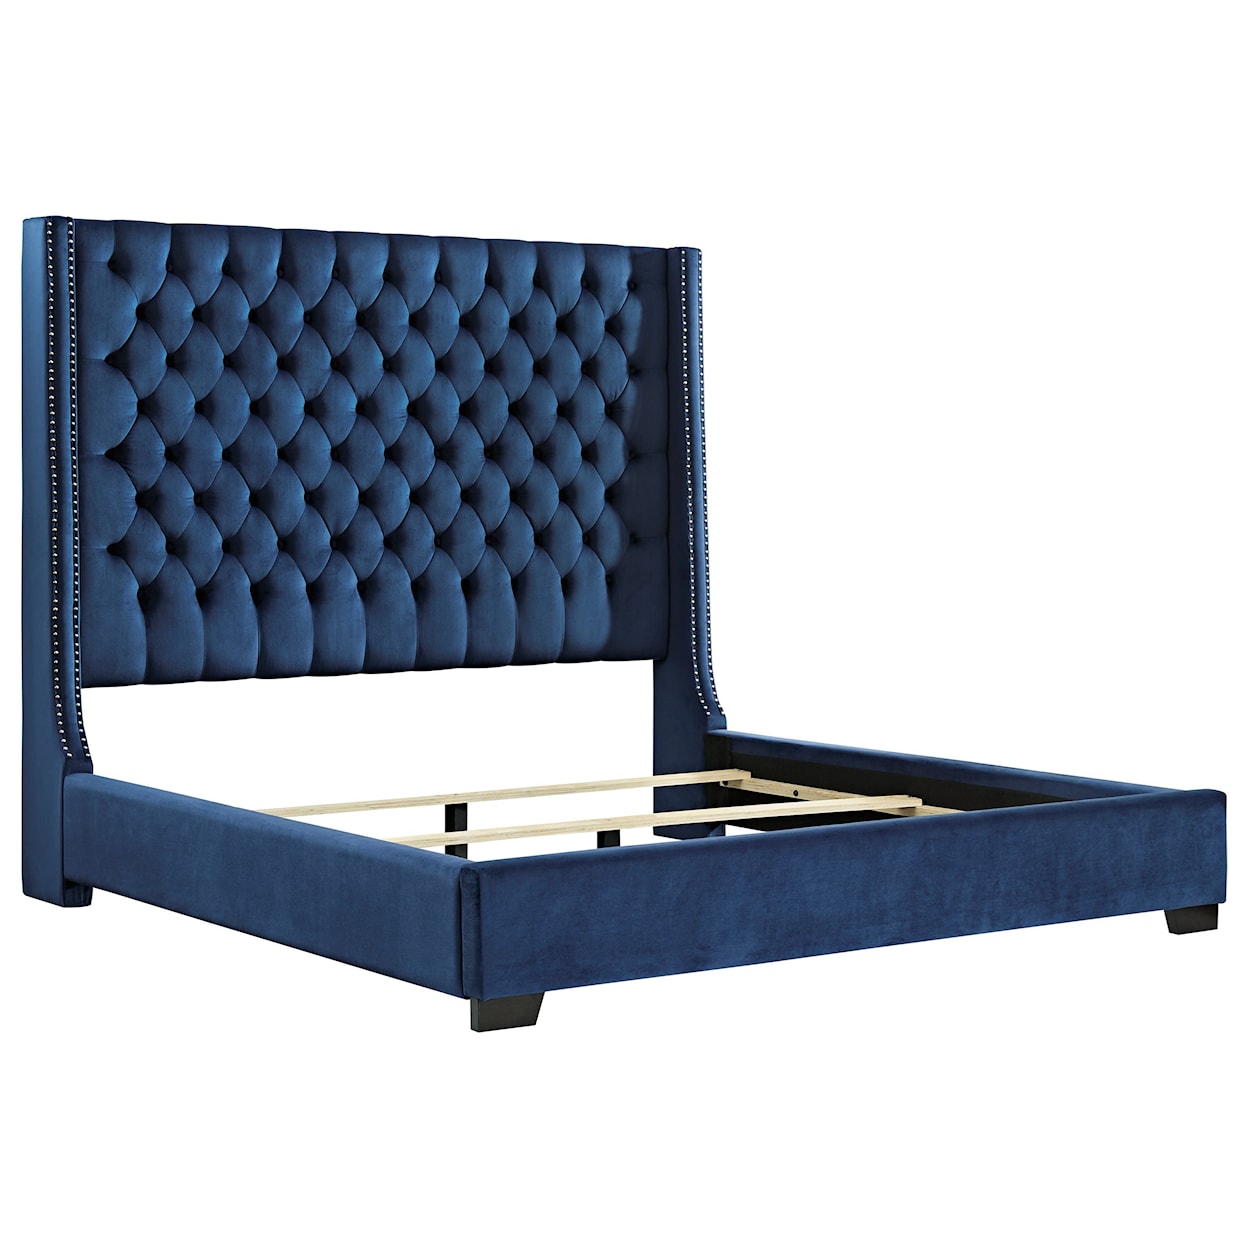 Ashley Furniture Signature Design Coralayne California King Upholstered Bed